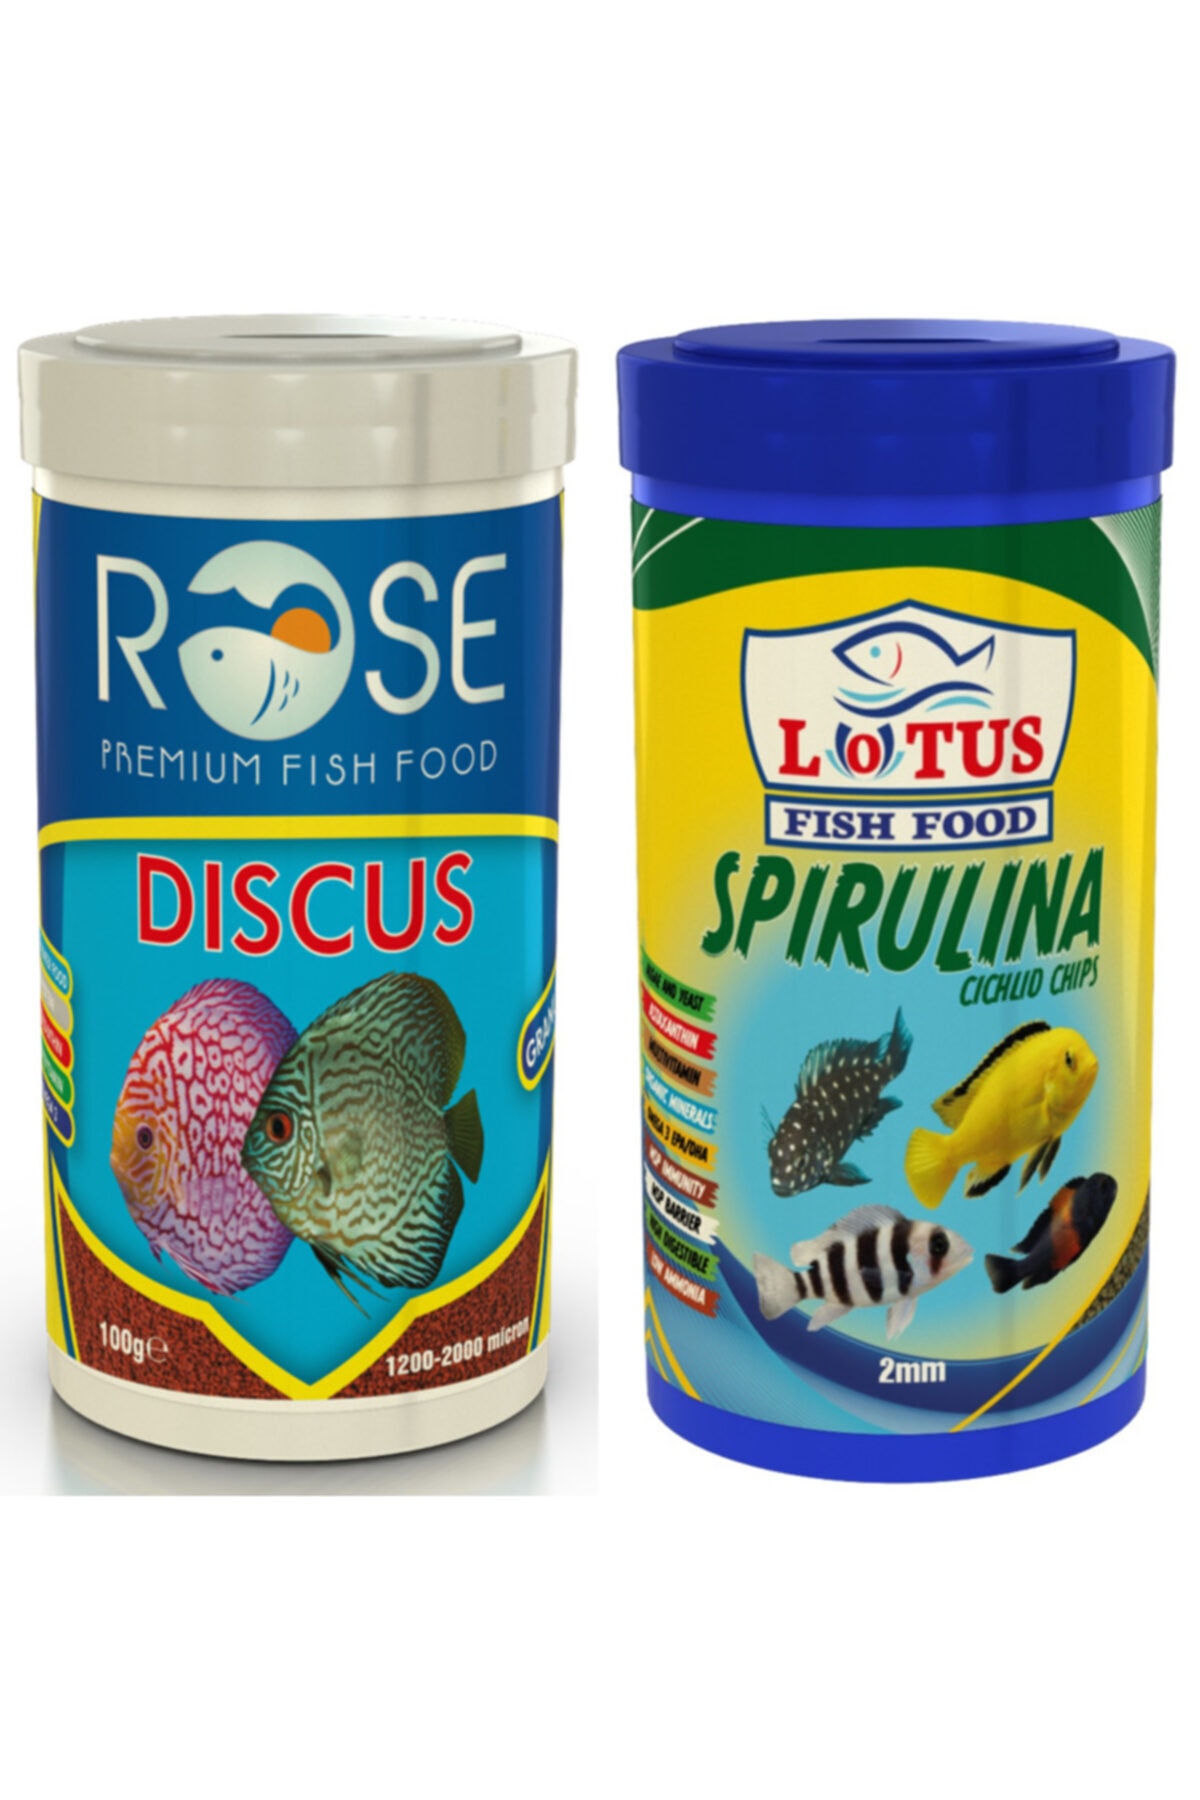 Spirulina Chips 250 ml ve Rose Discus 250 ml Balık Yemi